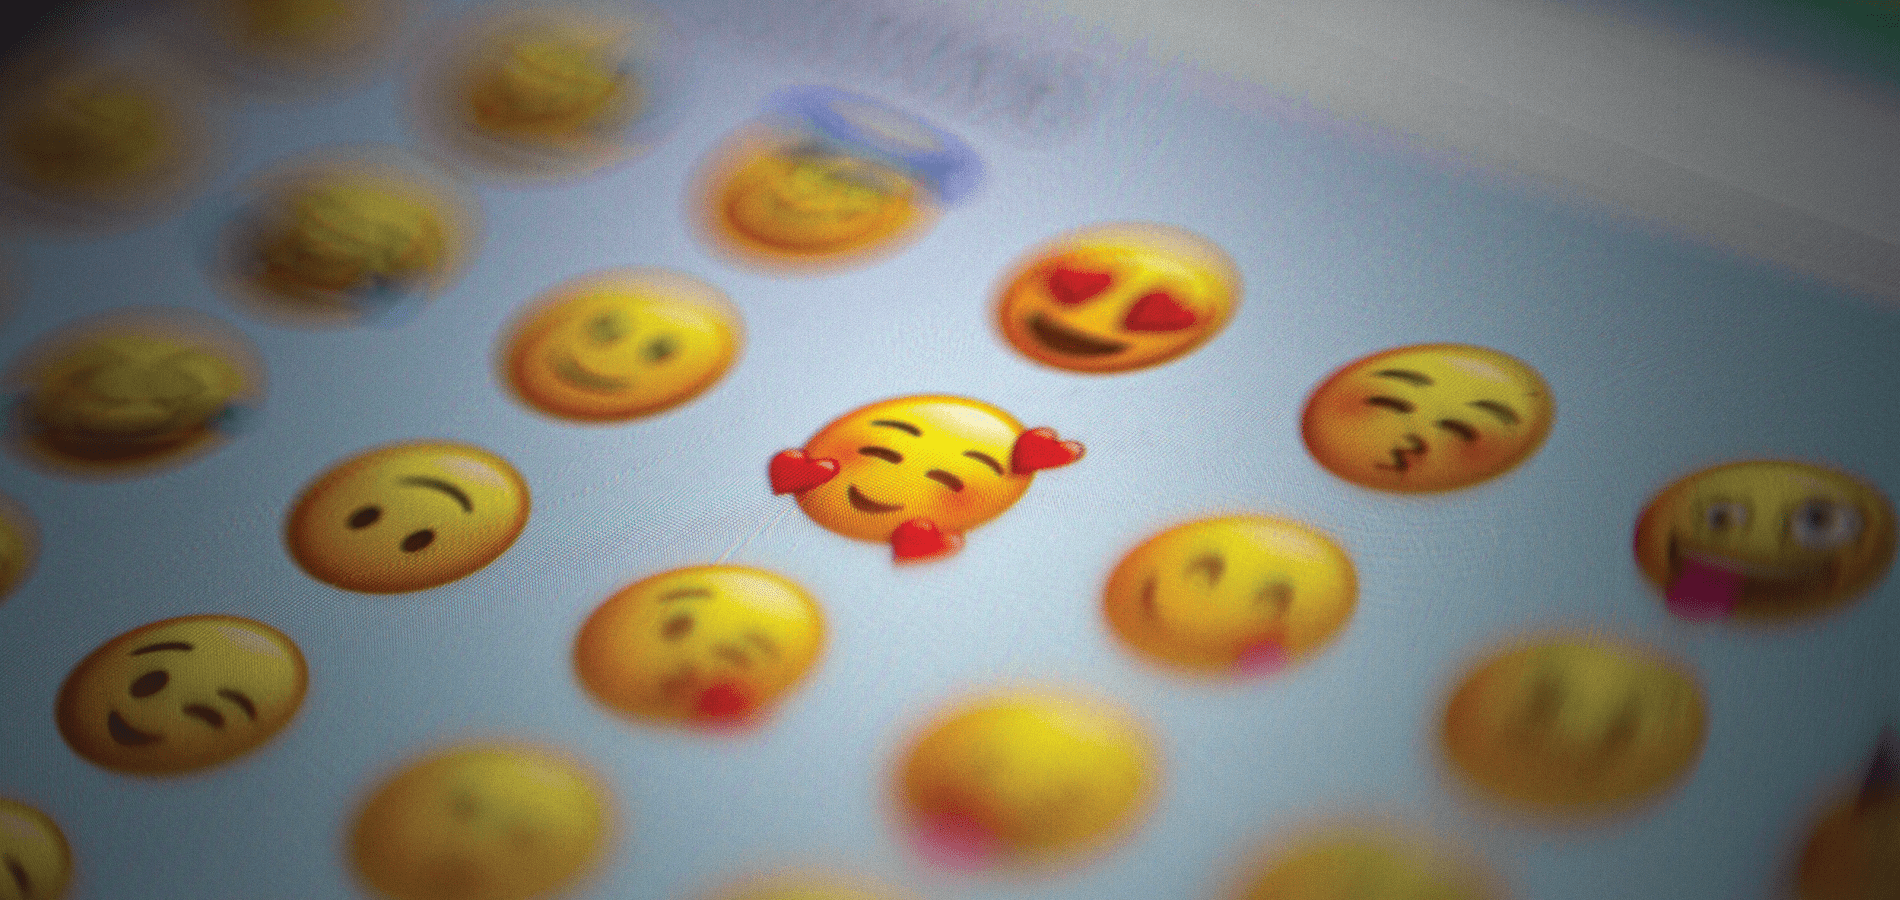 Emojis on a phone screen